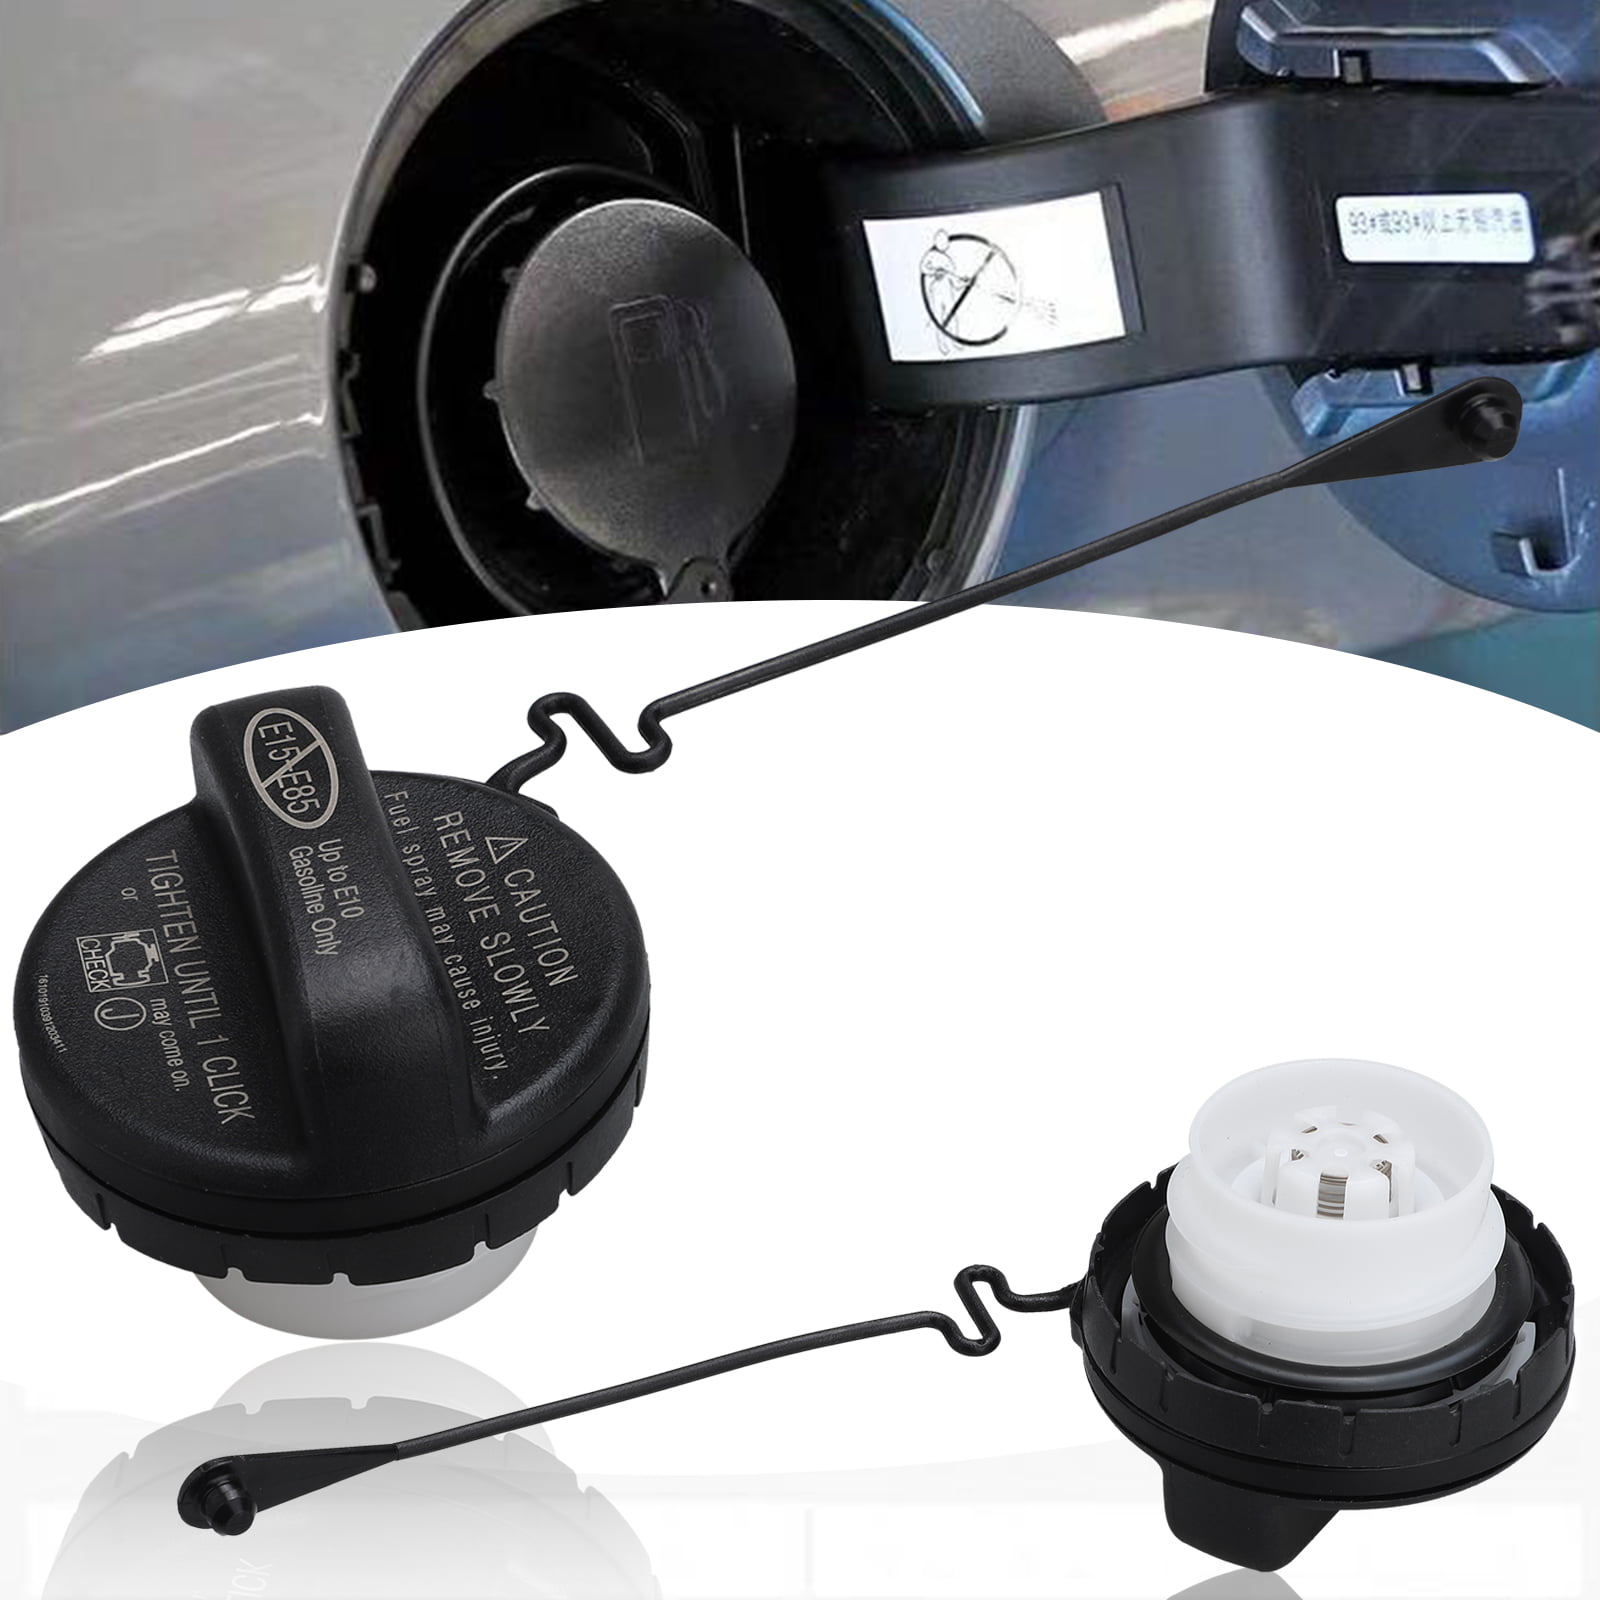 TRD fuel cap Suitable for Camry/Corolla Vios/Corolla etc GT86 